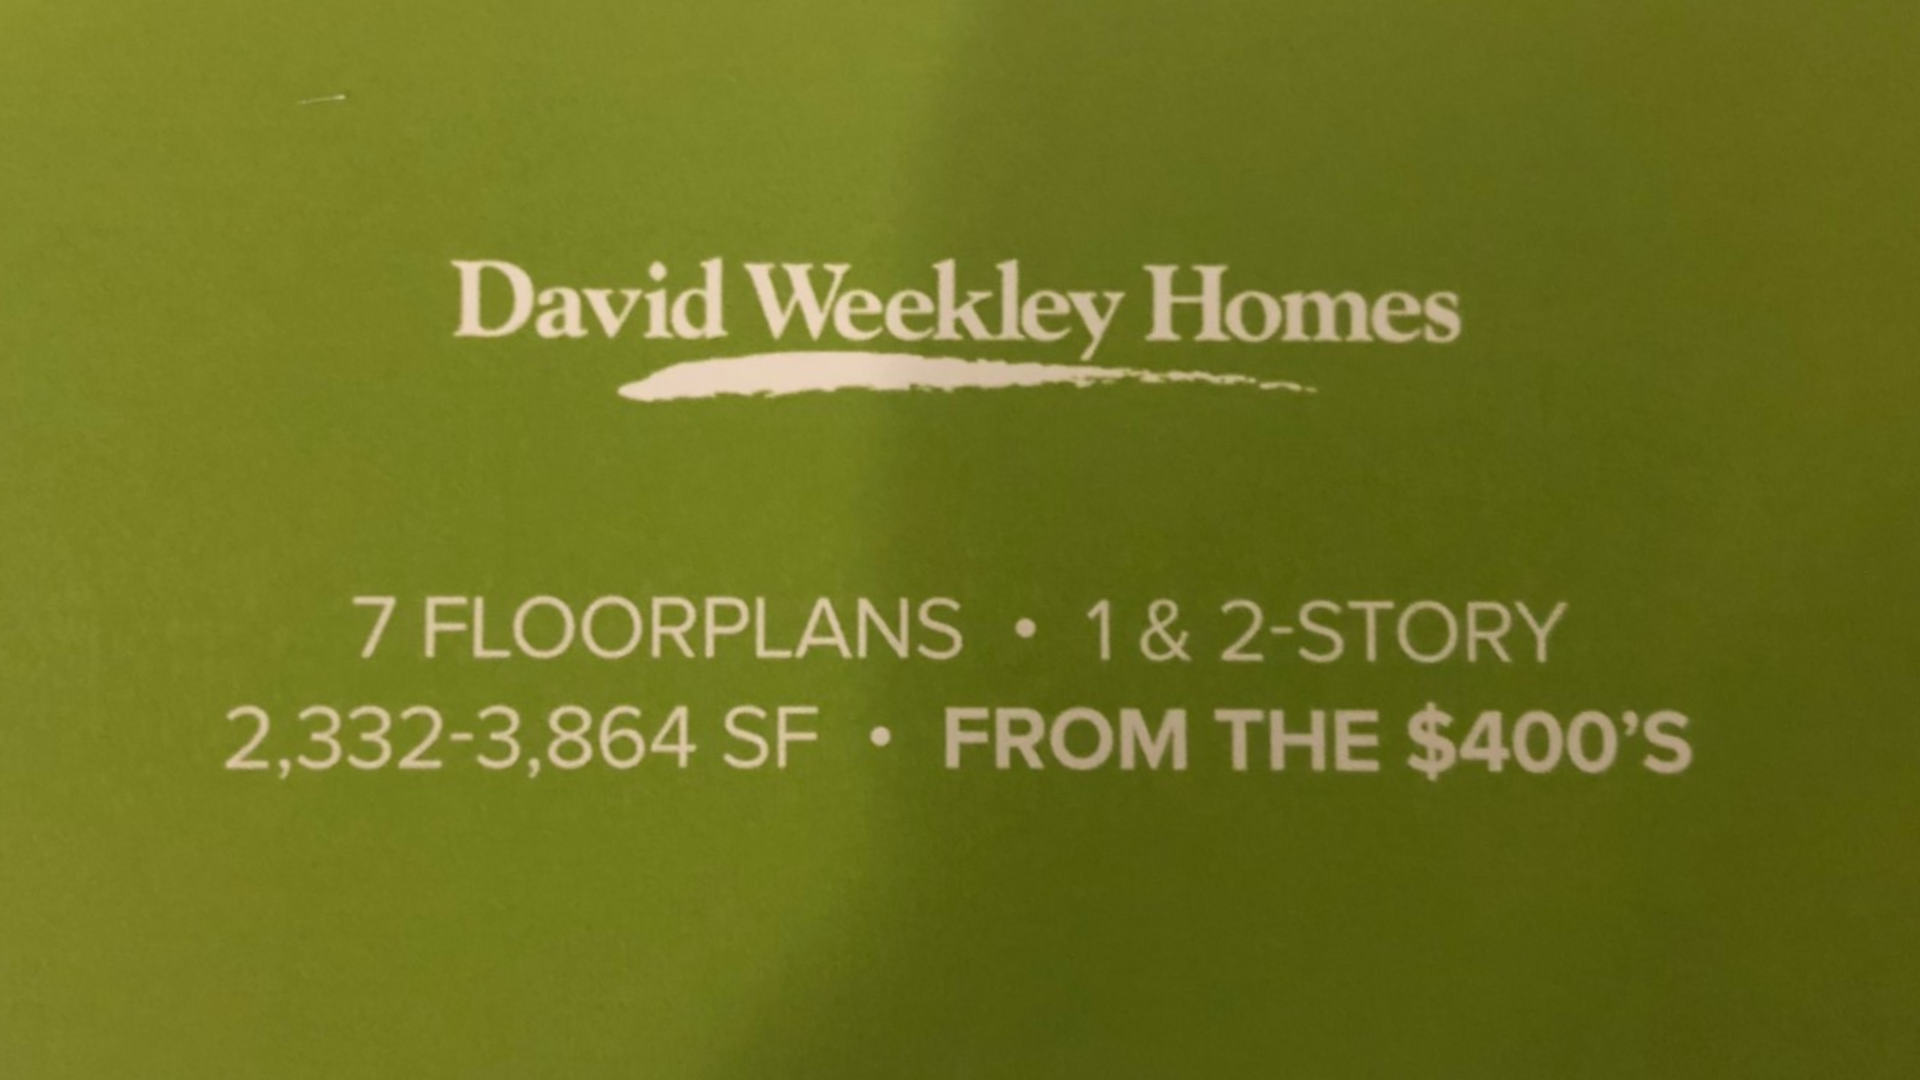 David Weekley Homes for sale at Union Park Norterra